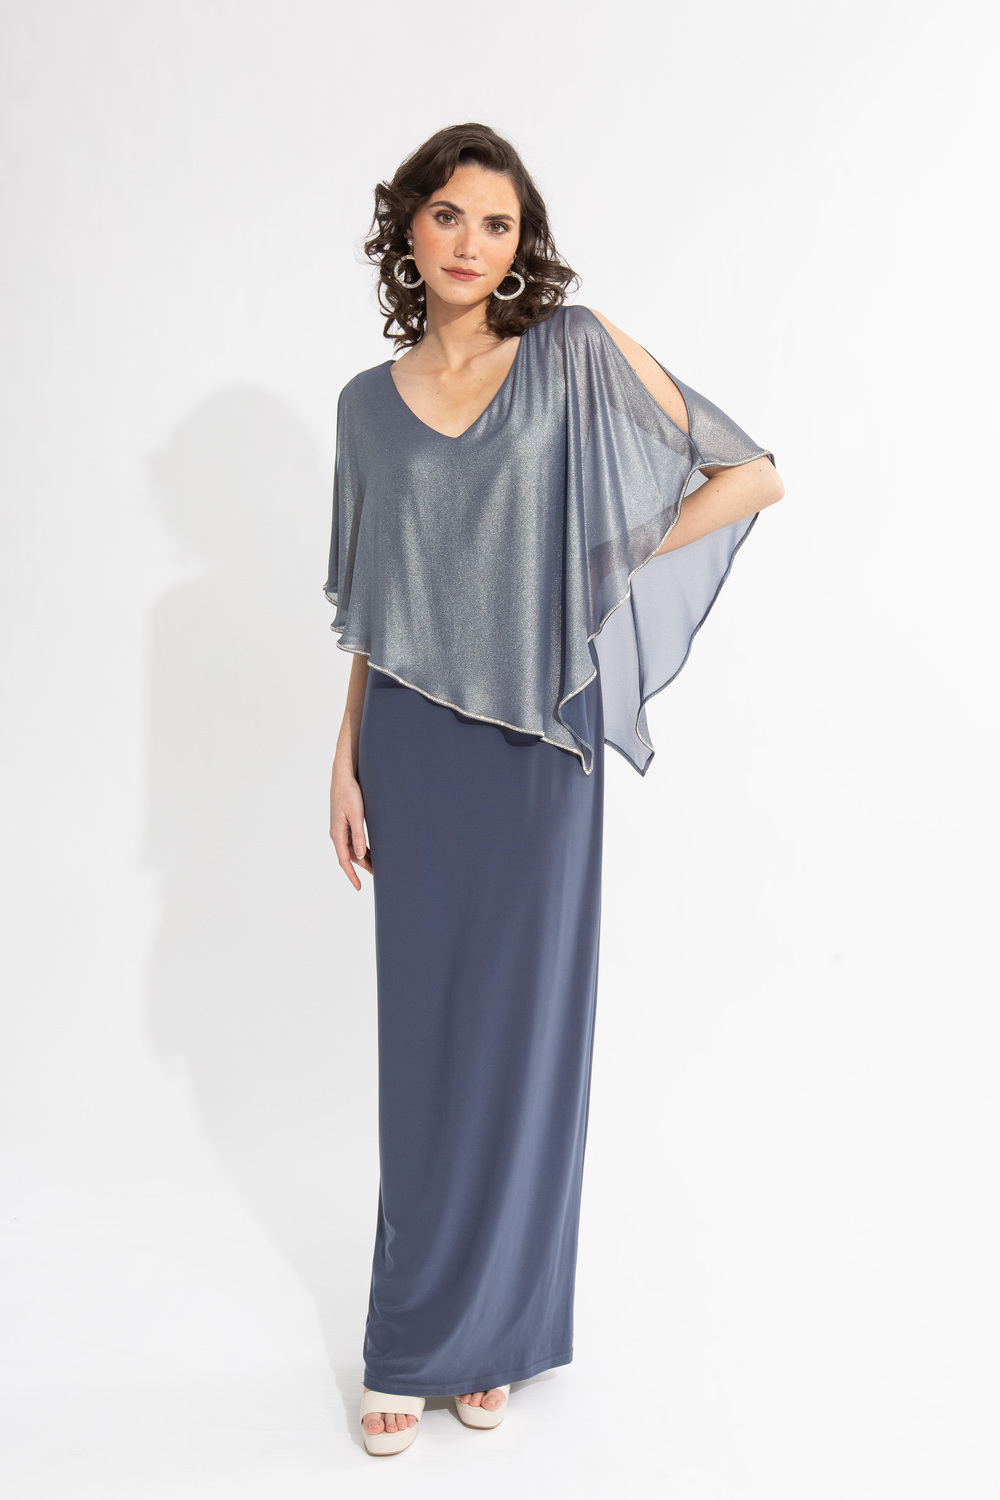 Chiffon Overlay Dress Style 231762. Mineral Blue